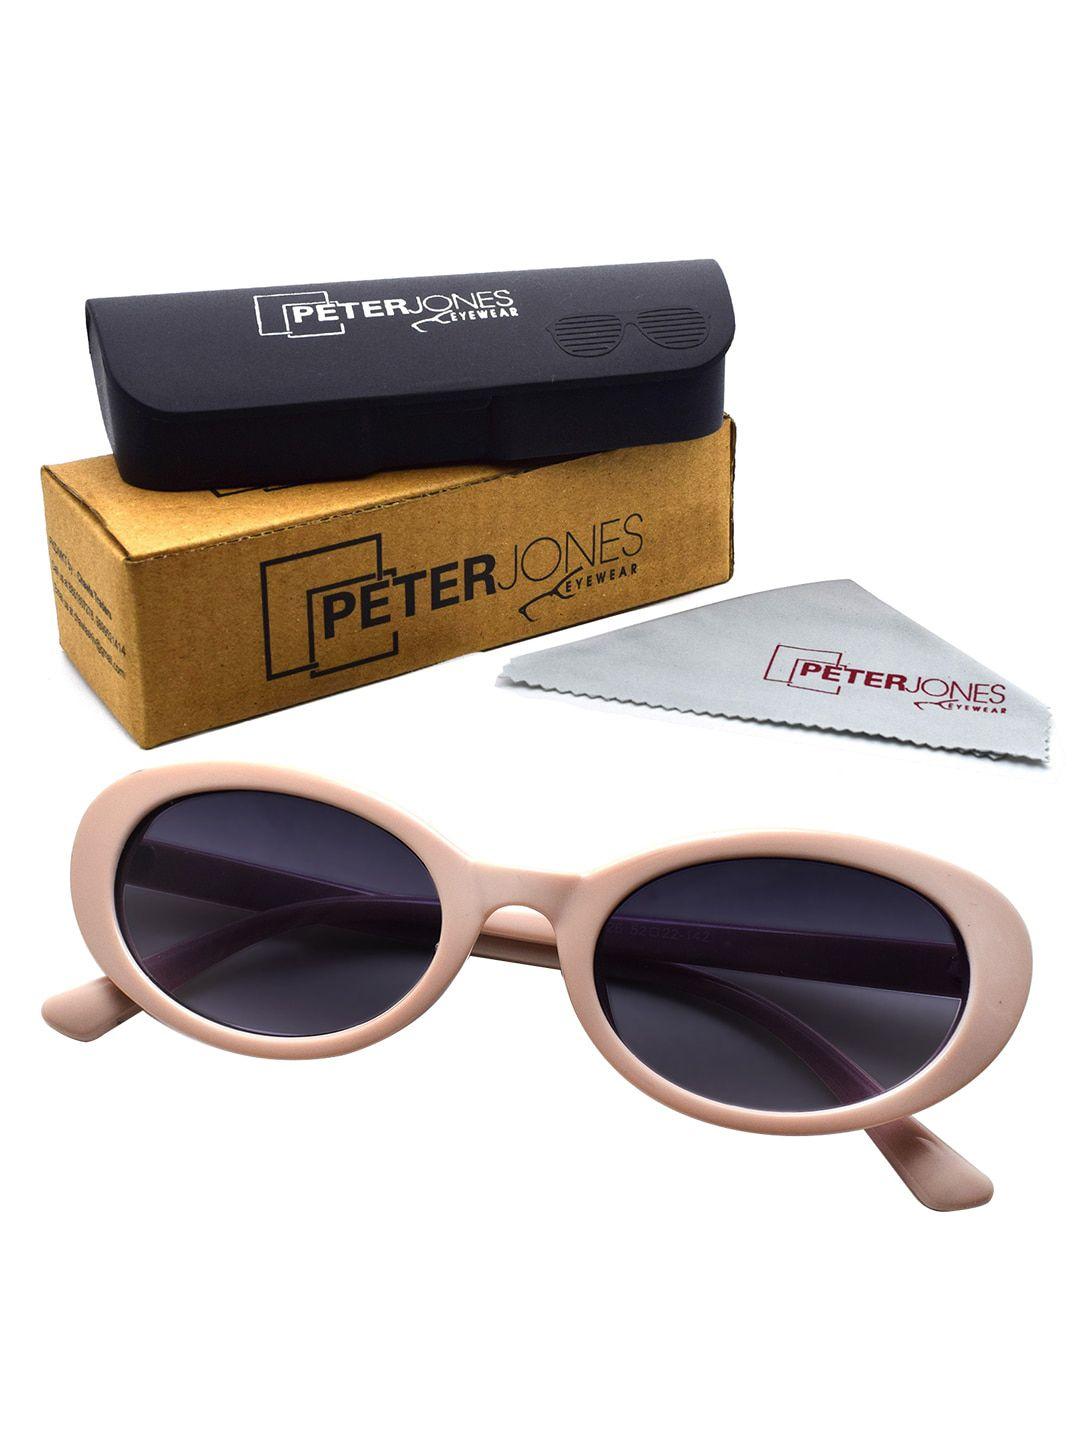 peter jones eyewear unisex cateye sunglasses with uv protected lens